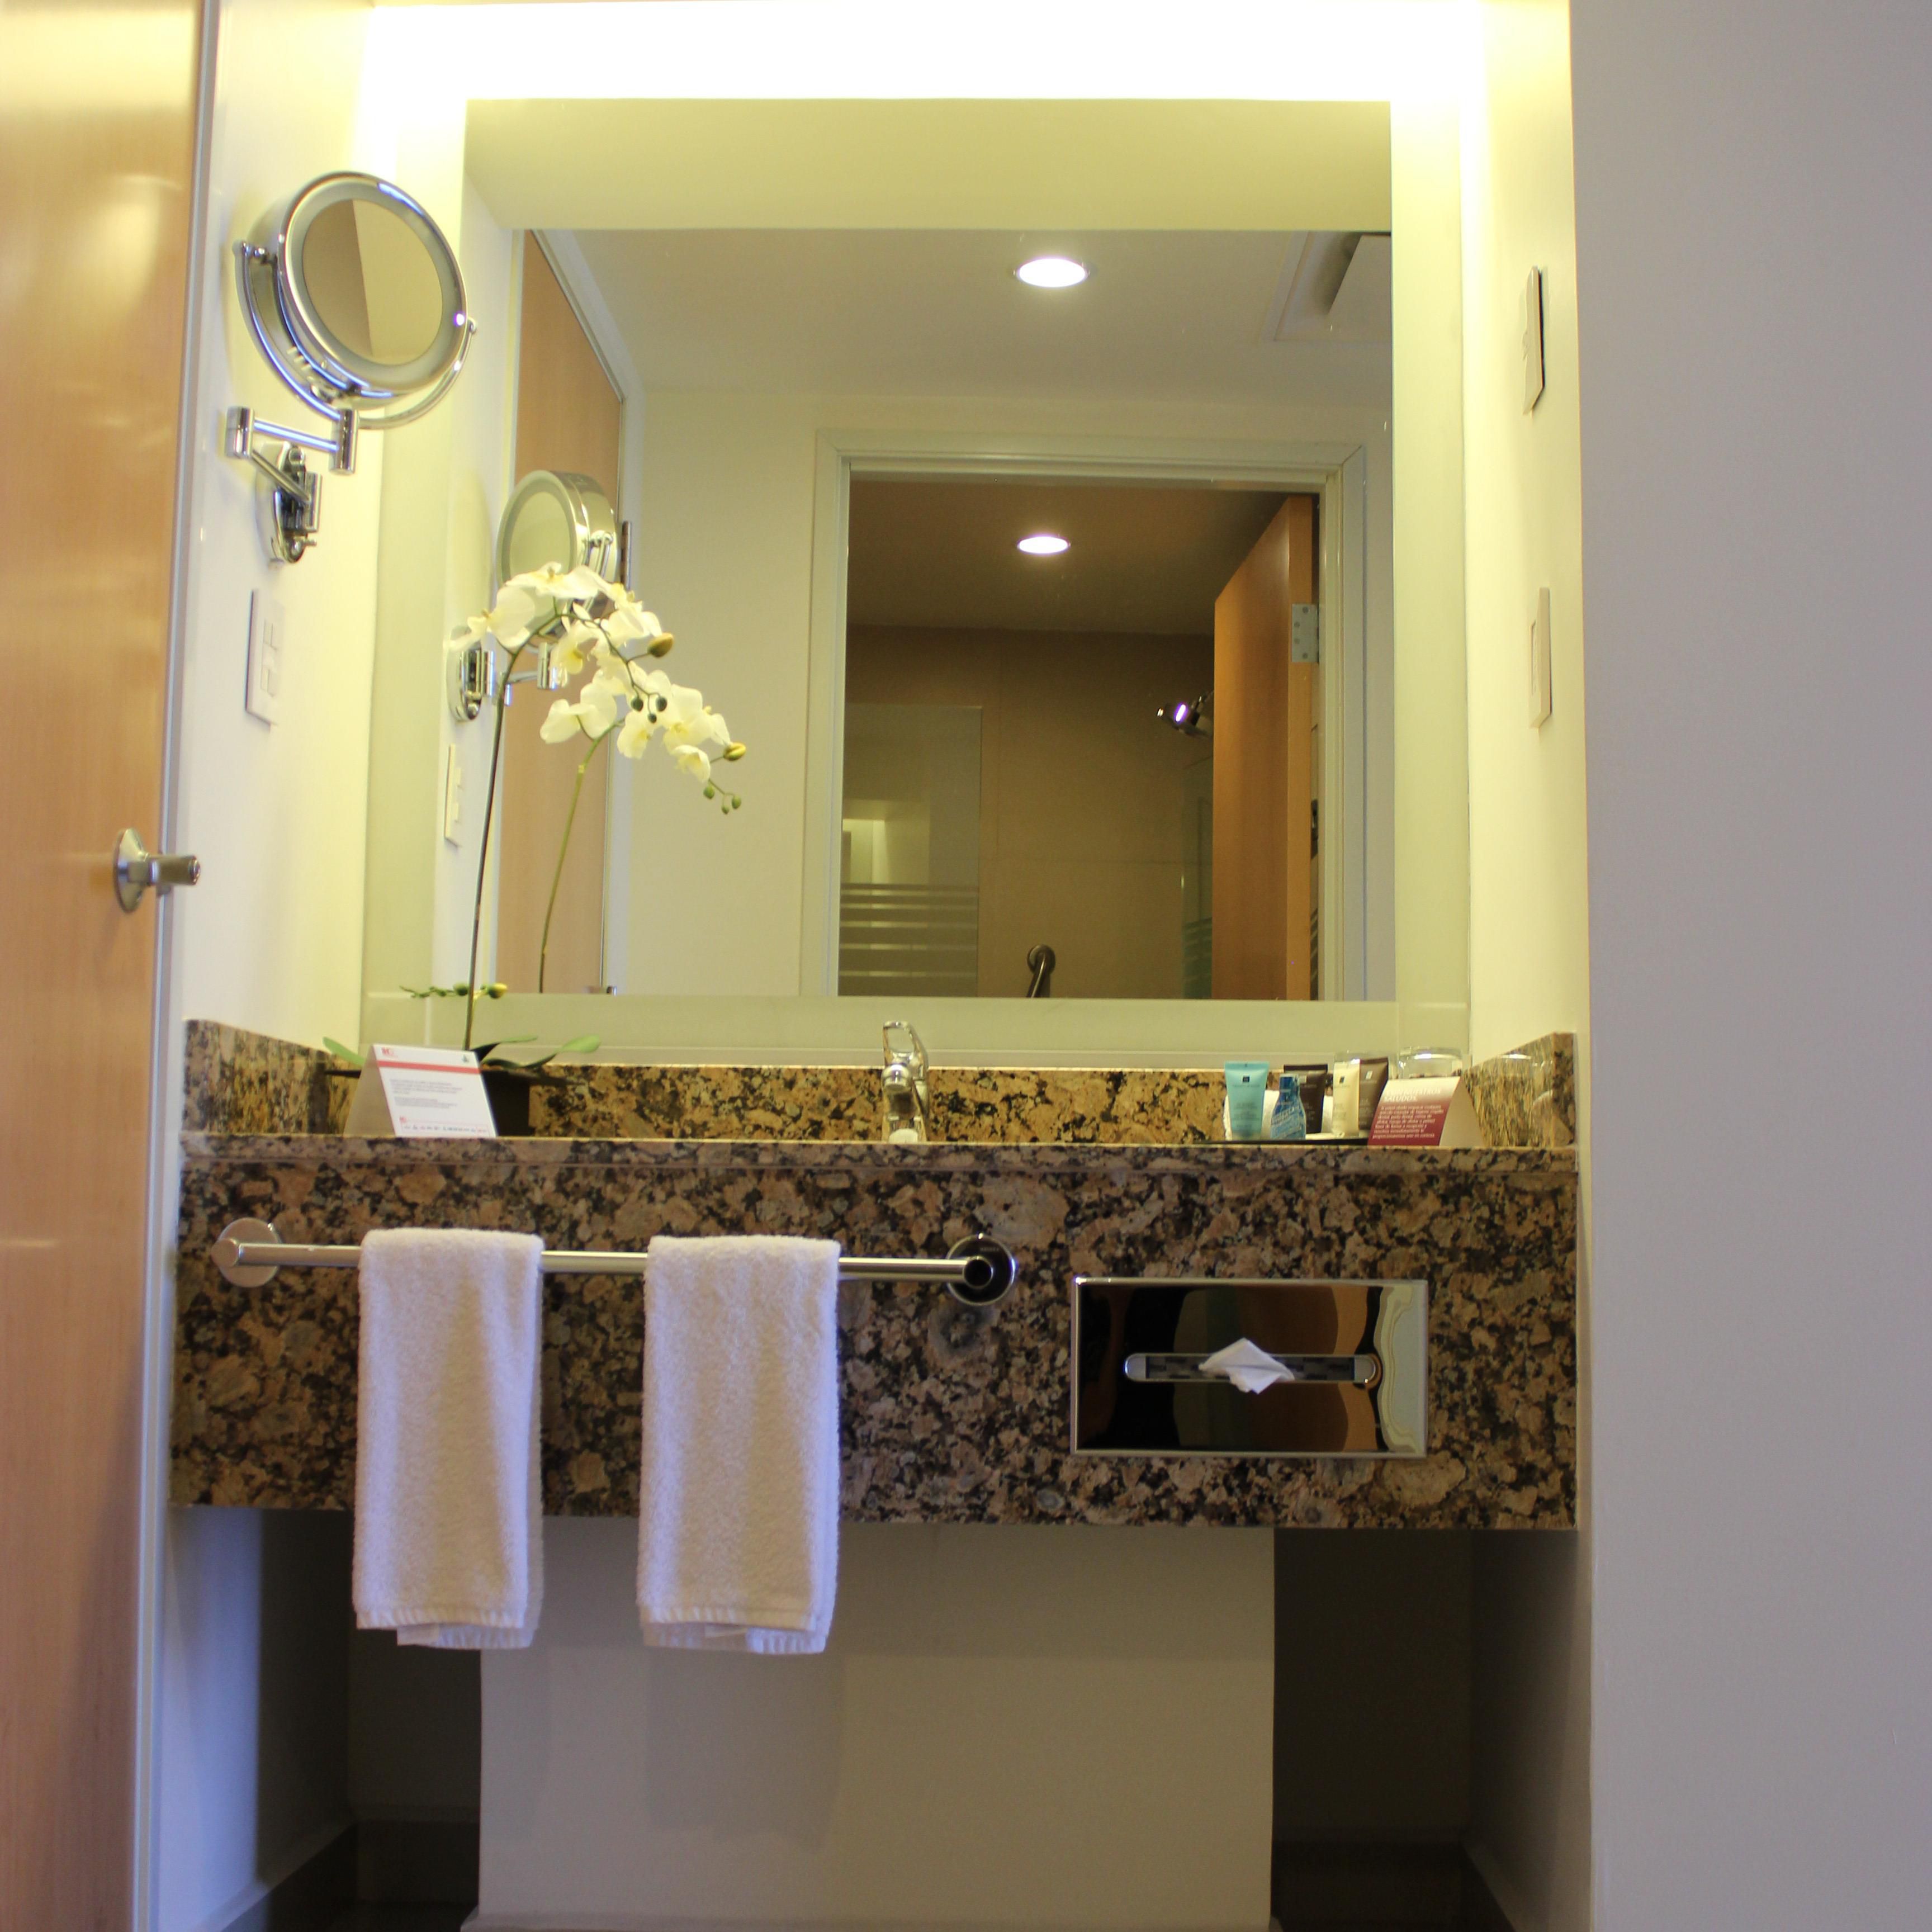 Imperial suite bathroom amenities